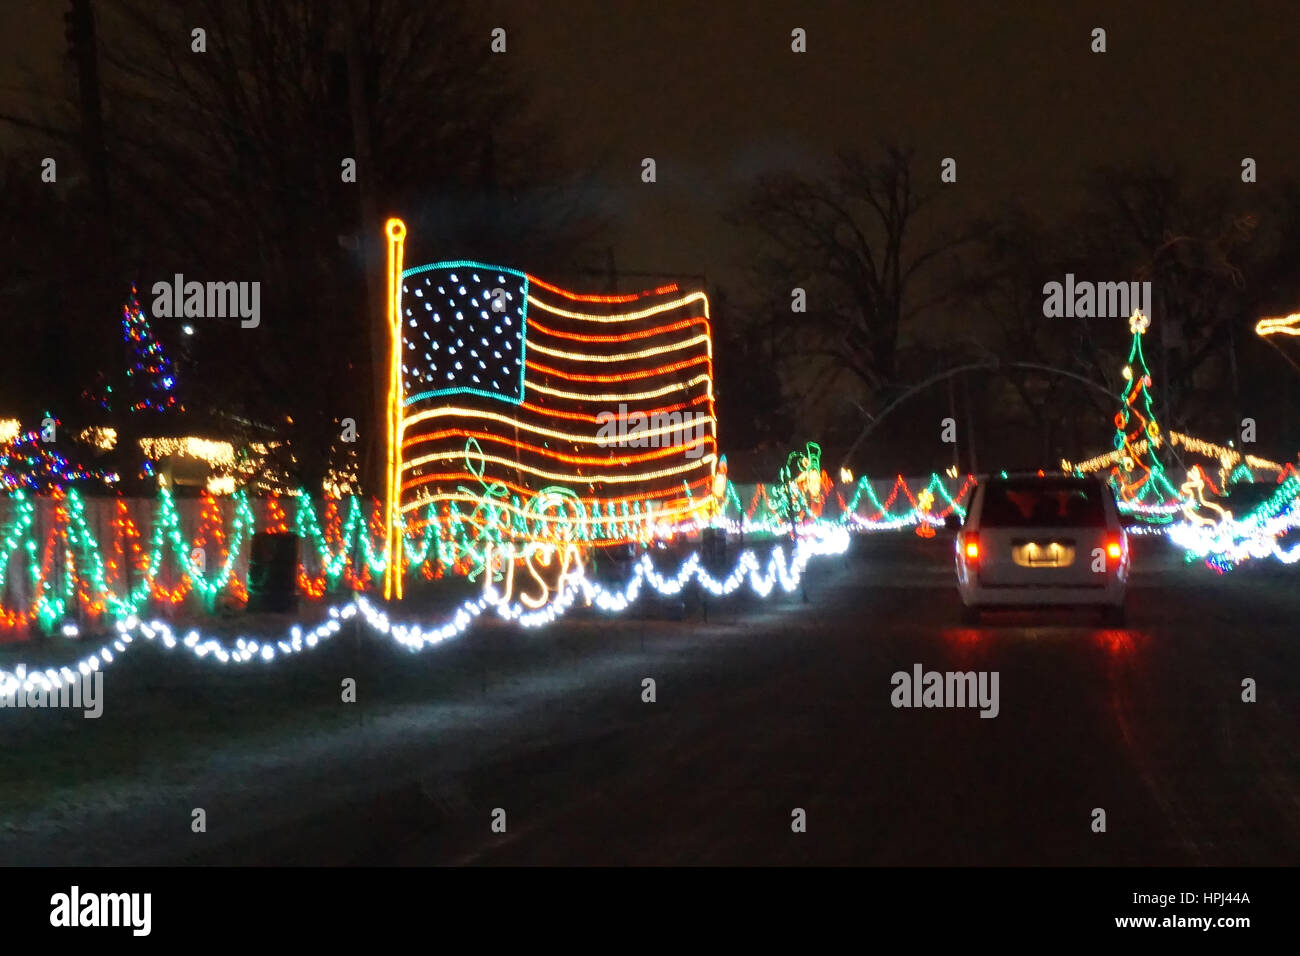 Outdoor display of Christmas Lights Stock Photo